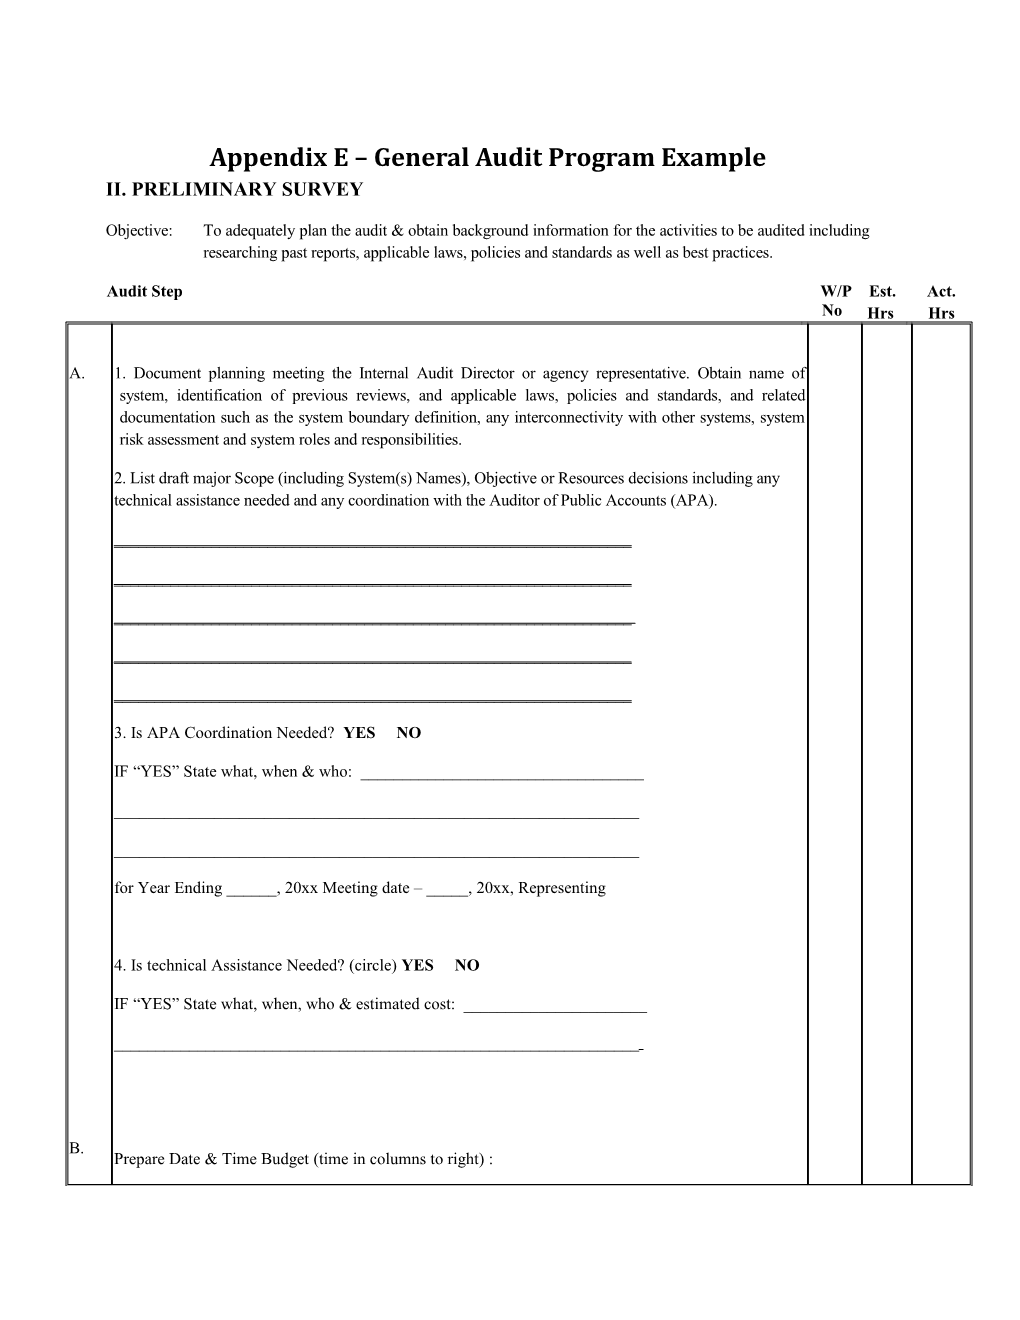 Appendix E General Audit Program Example